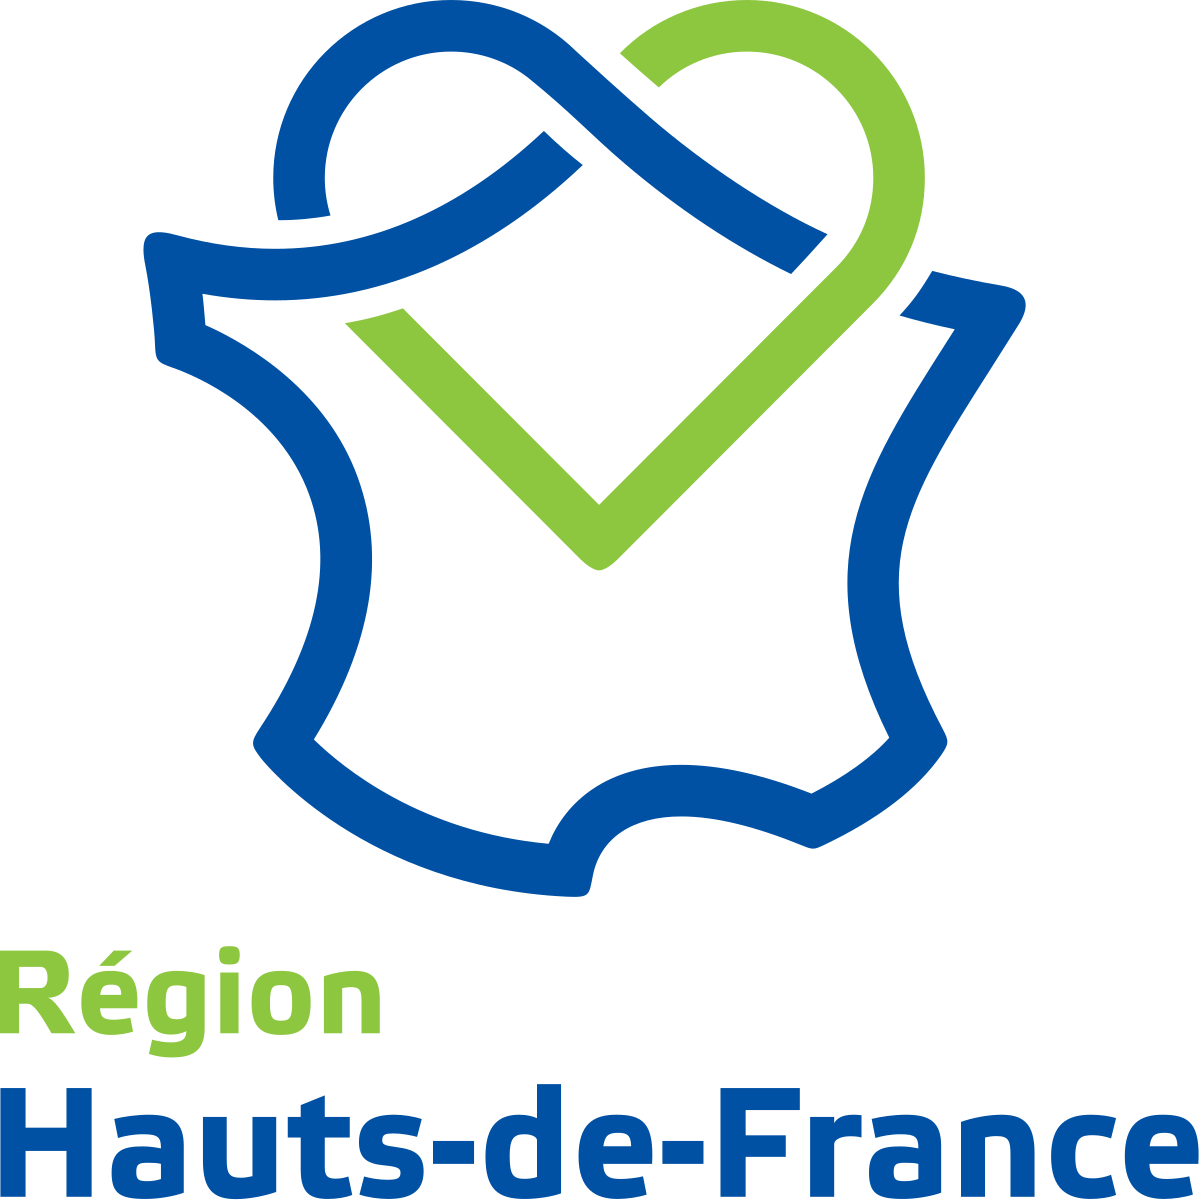 Region_Hauts_de_France_logo